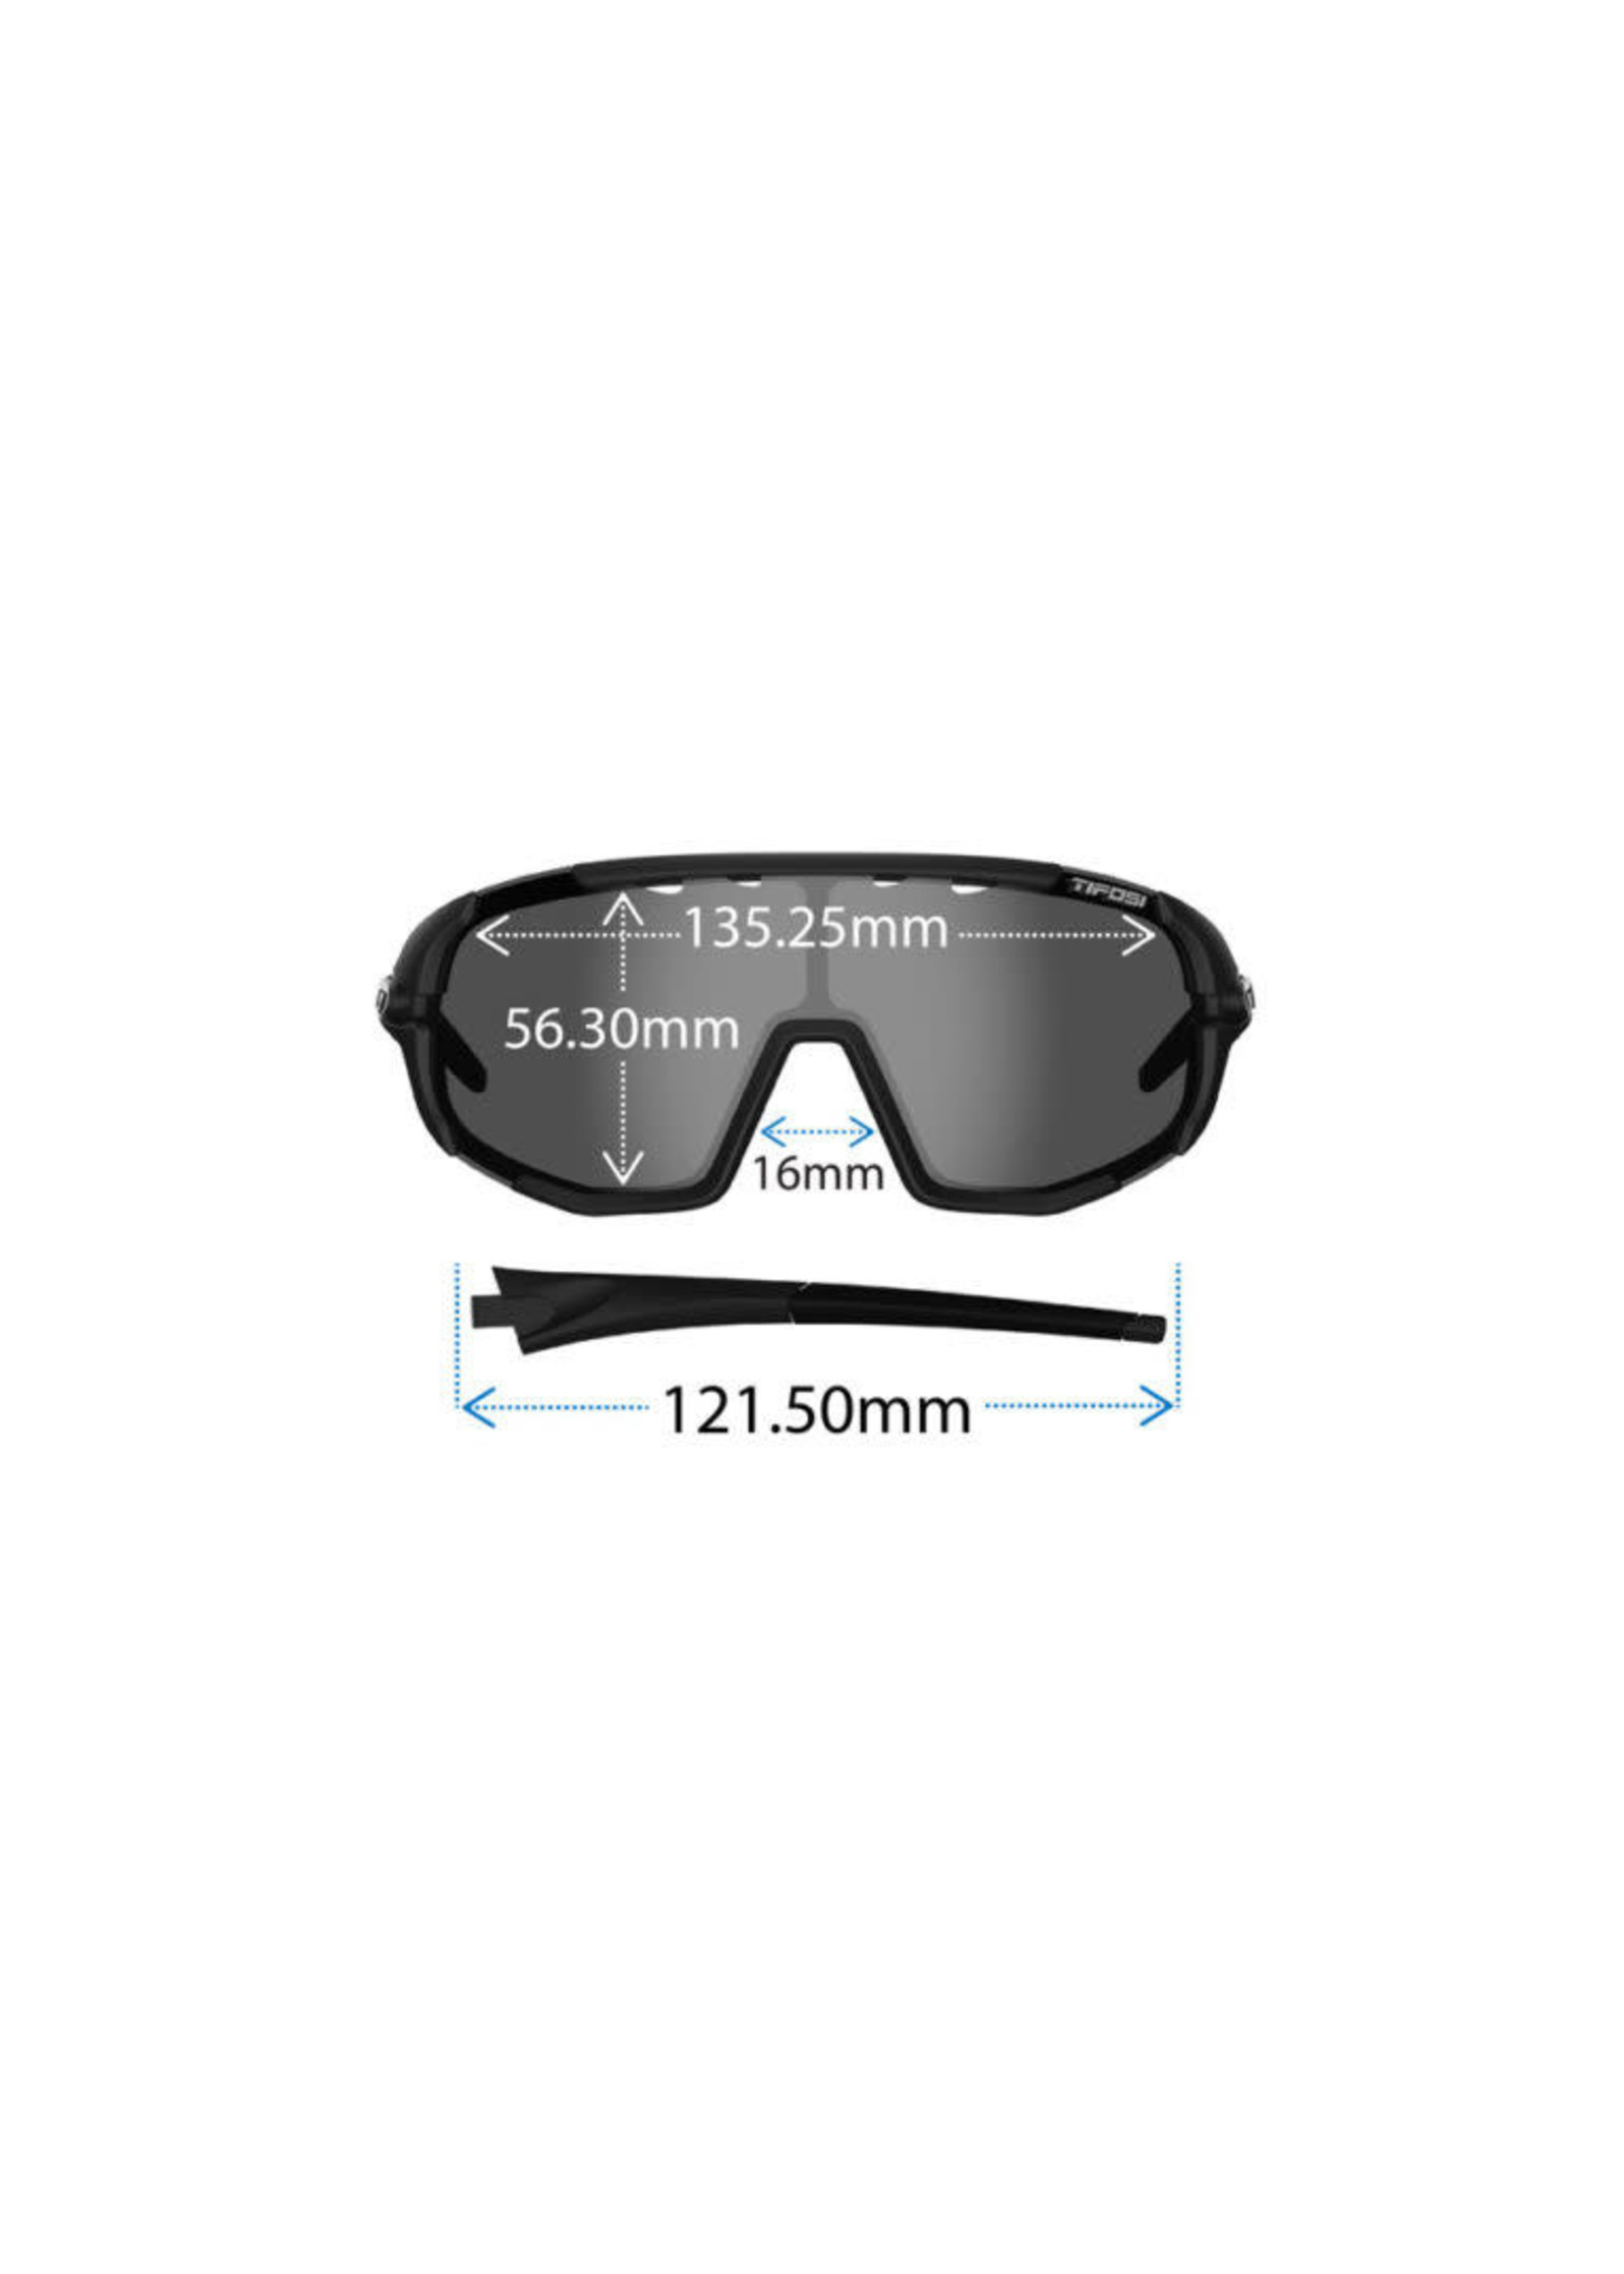 Tifosi Optics Sledge, Matte Black Fototec Sunglasses